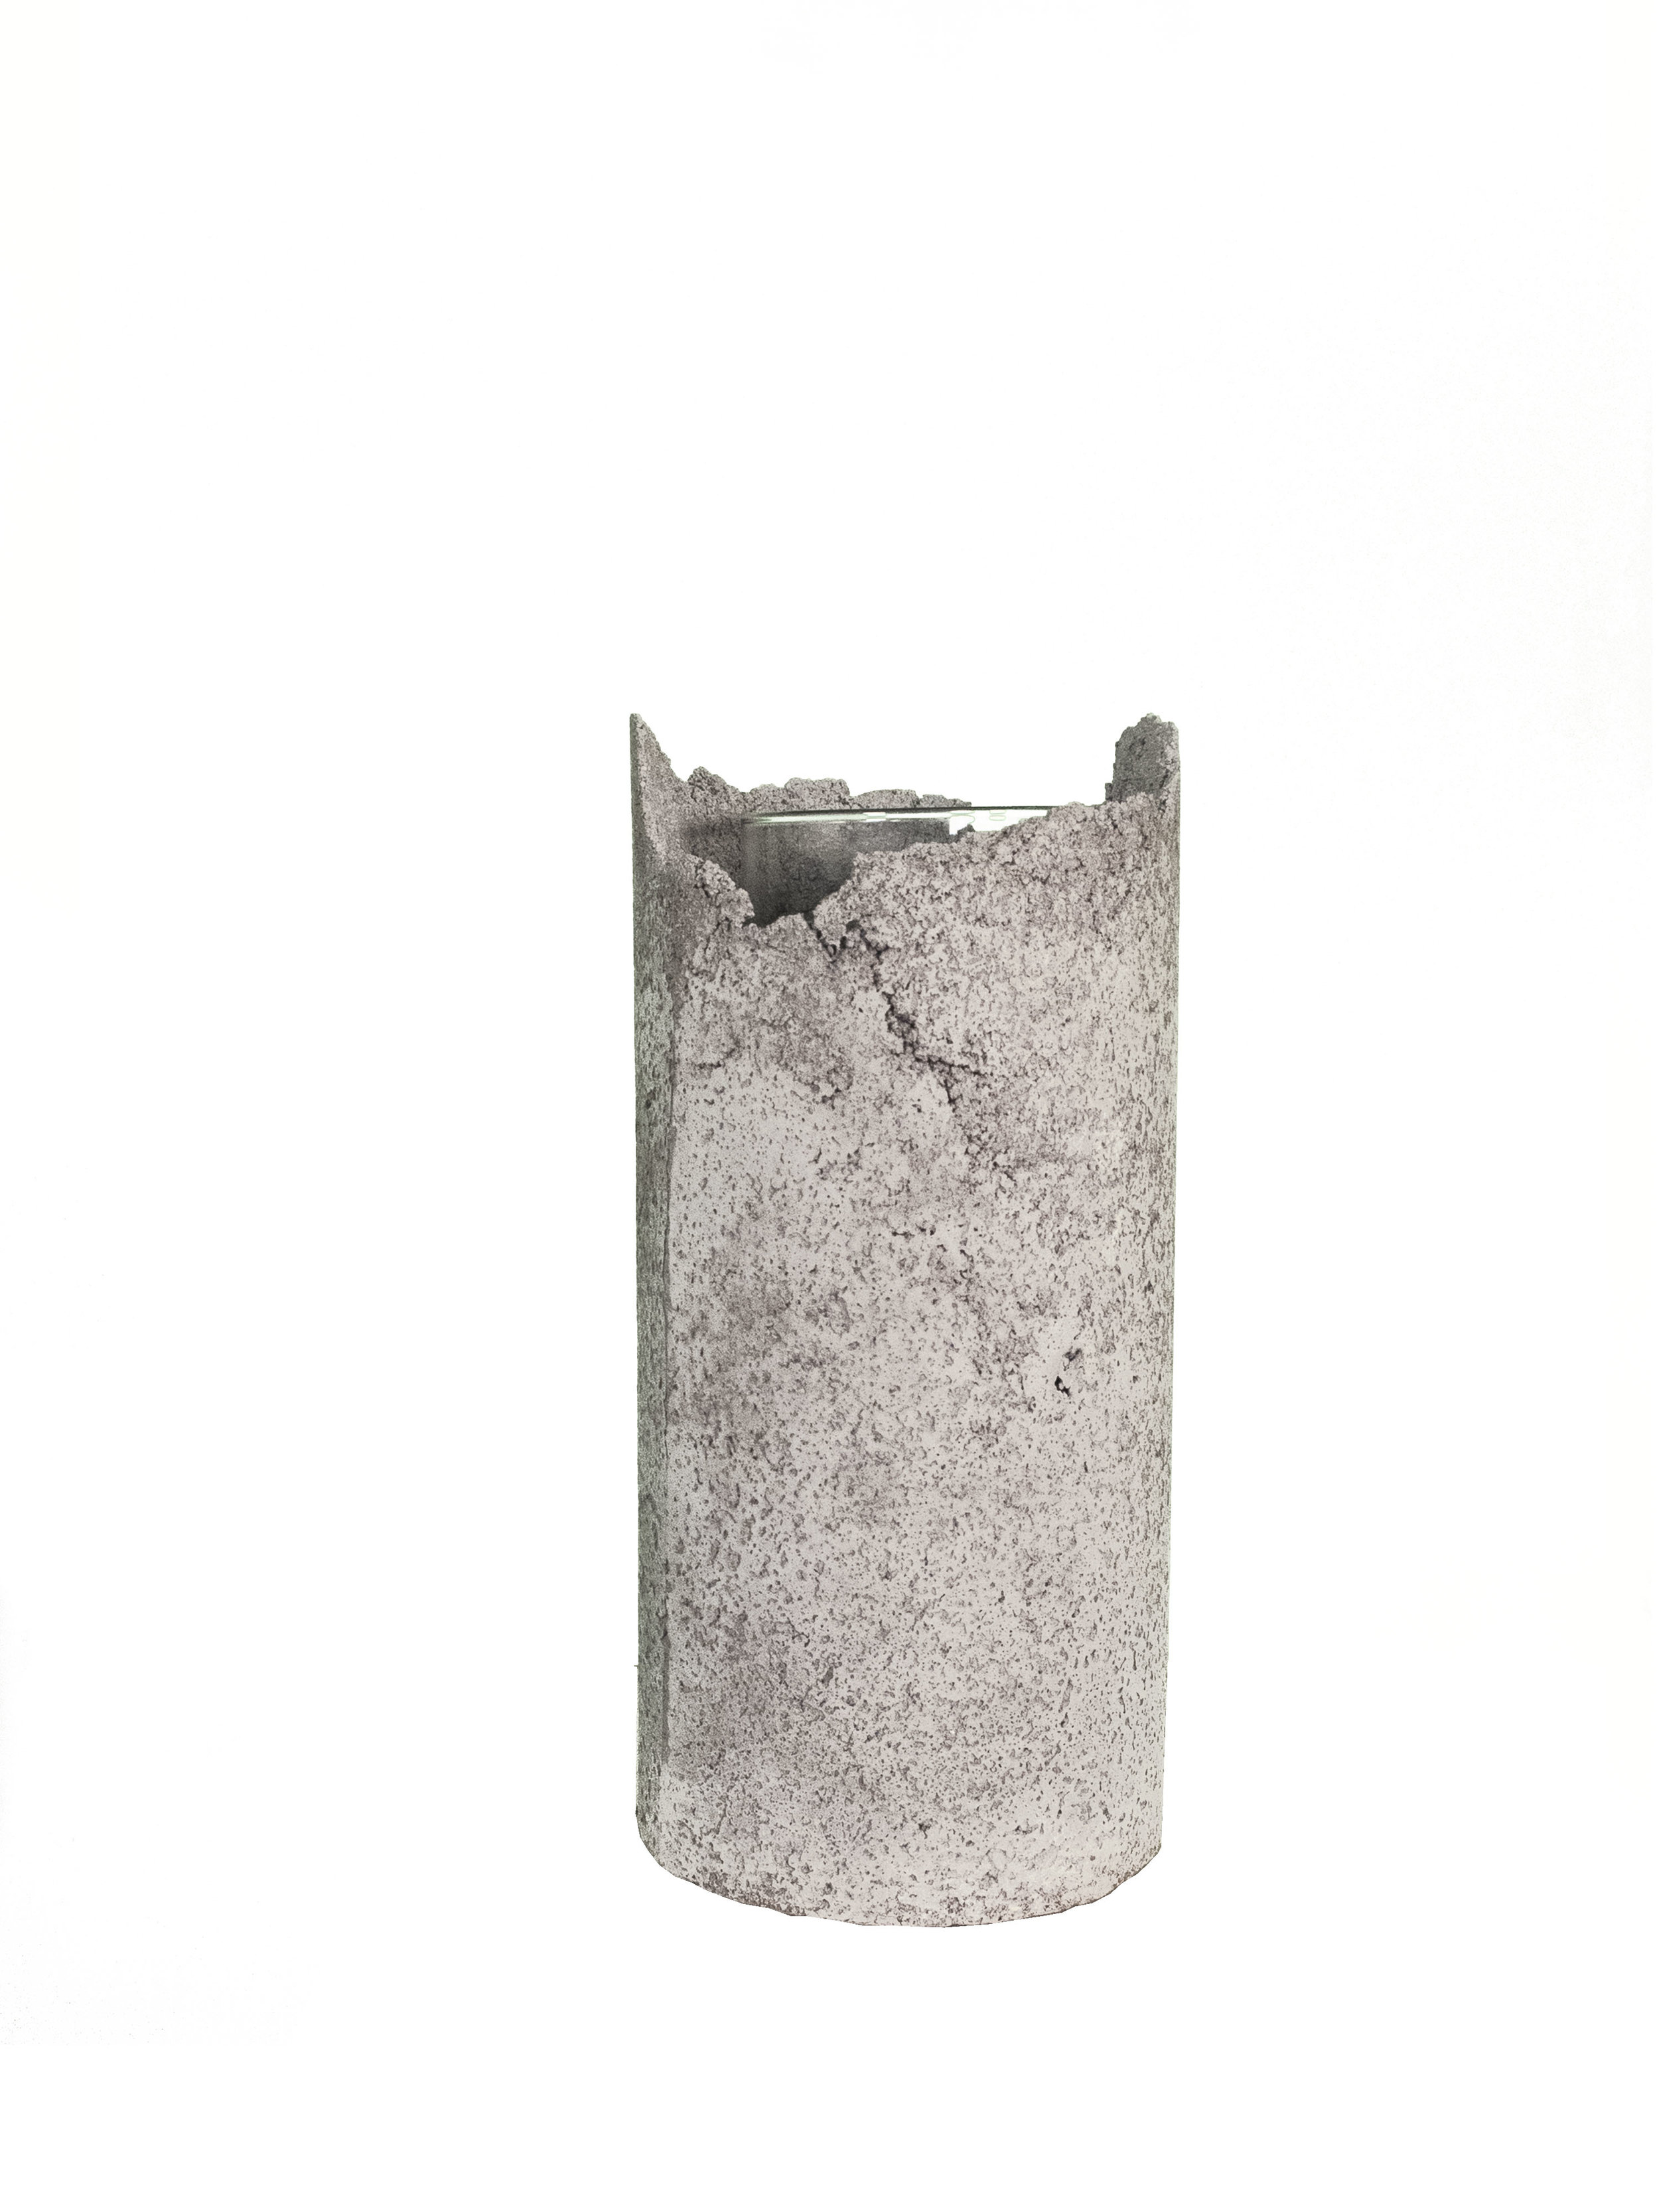 FULO Concrete vase - bare necessities